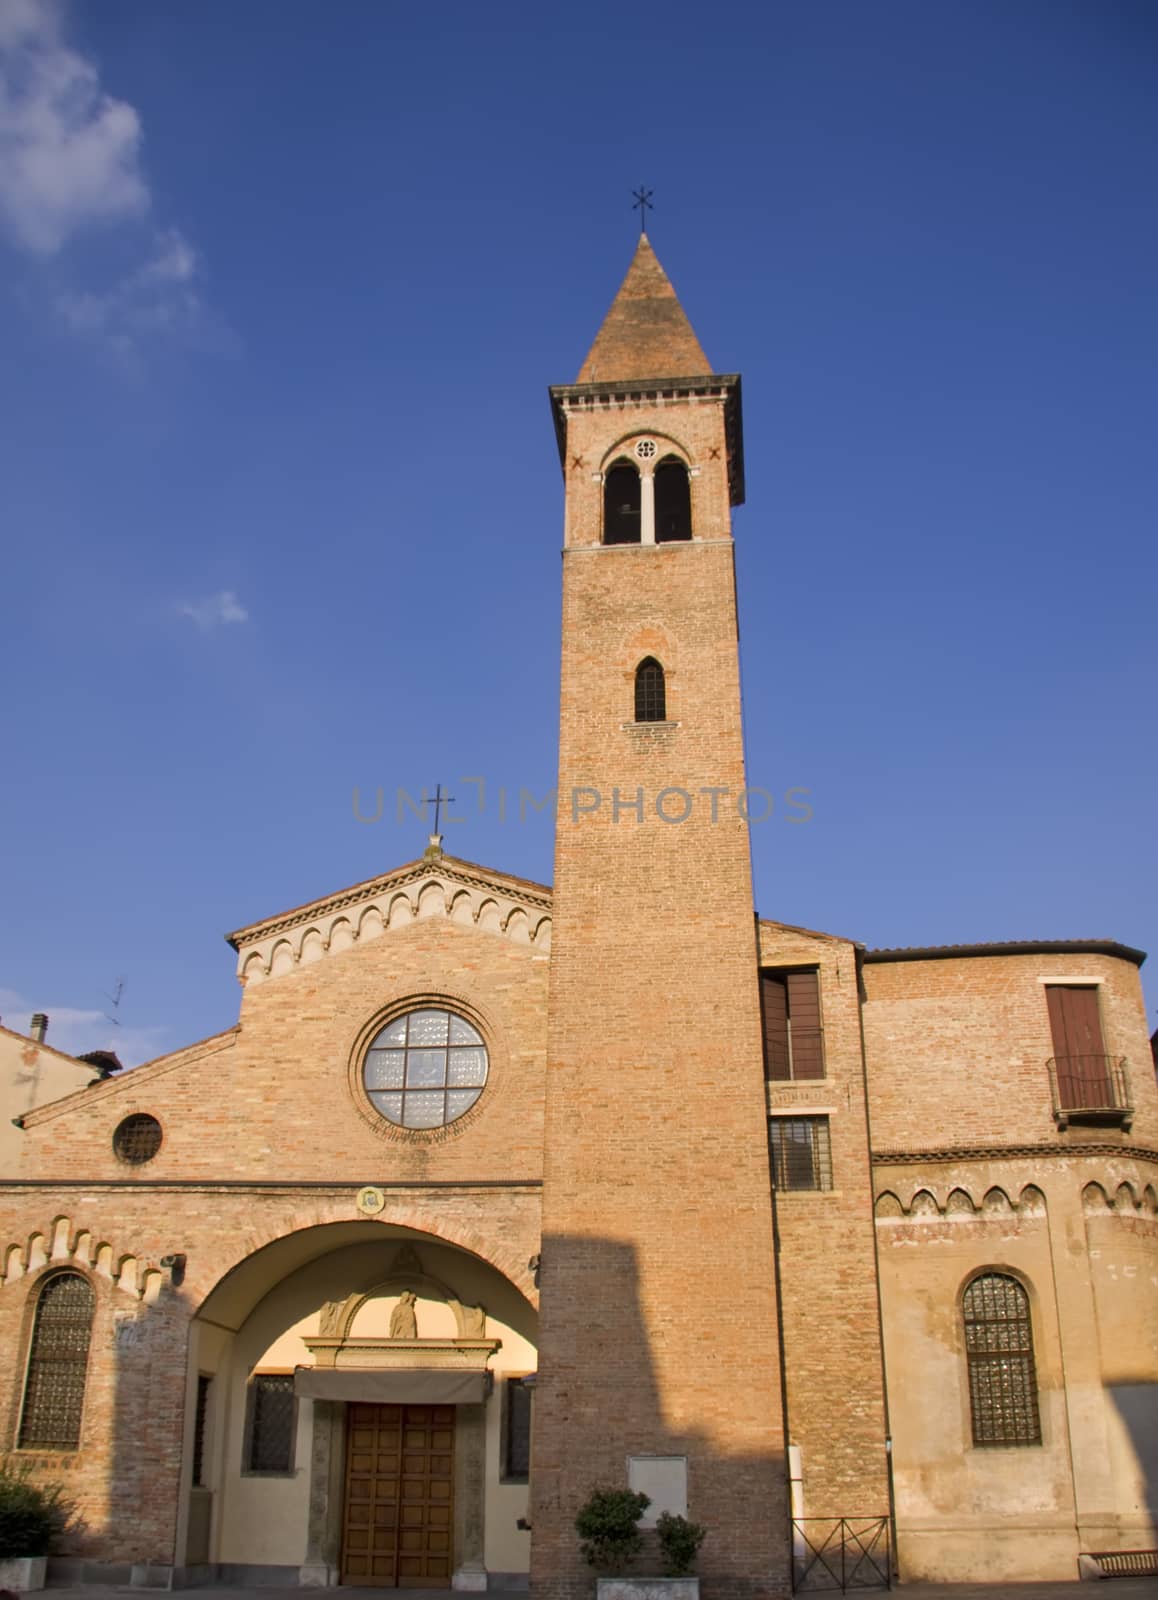 Church tower in Padua, Italy